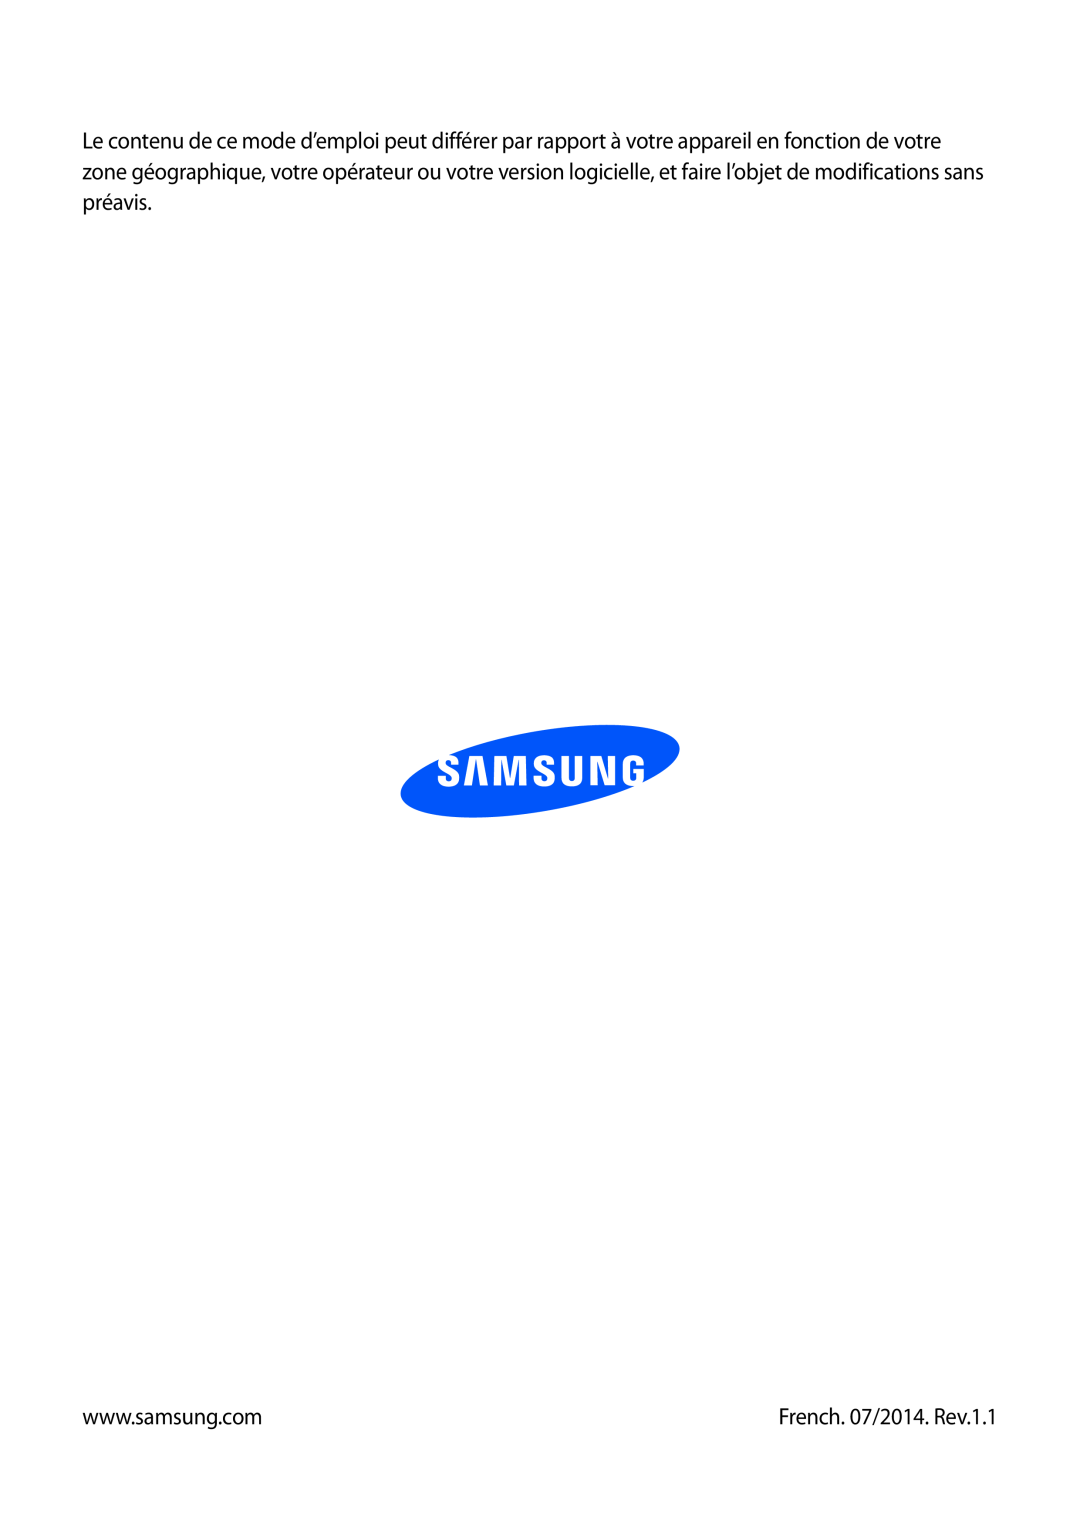 Samsung SM-T530NYKAXEF, SM-T530NZWEXEF, SM-T530NZWAXEF manual French. 07/2014. Rev.1.1 